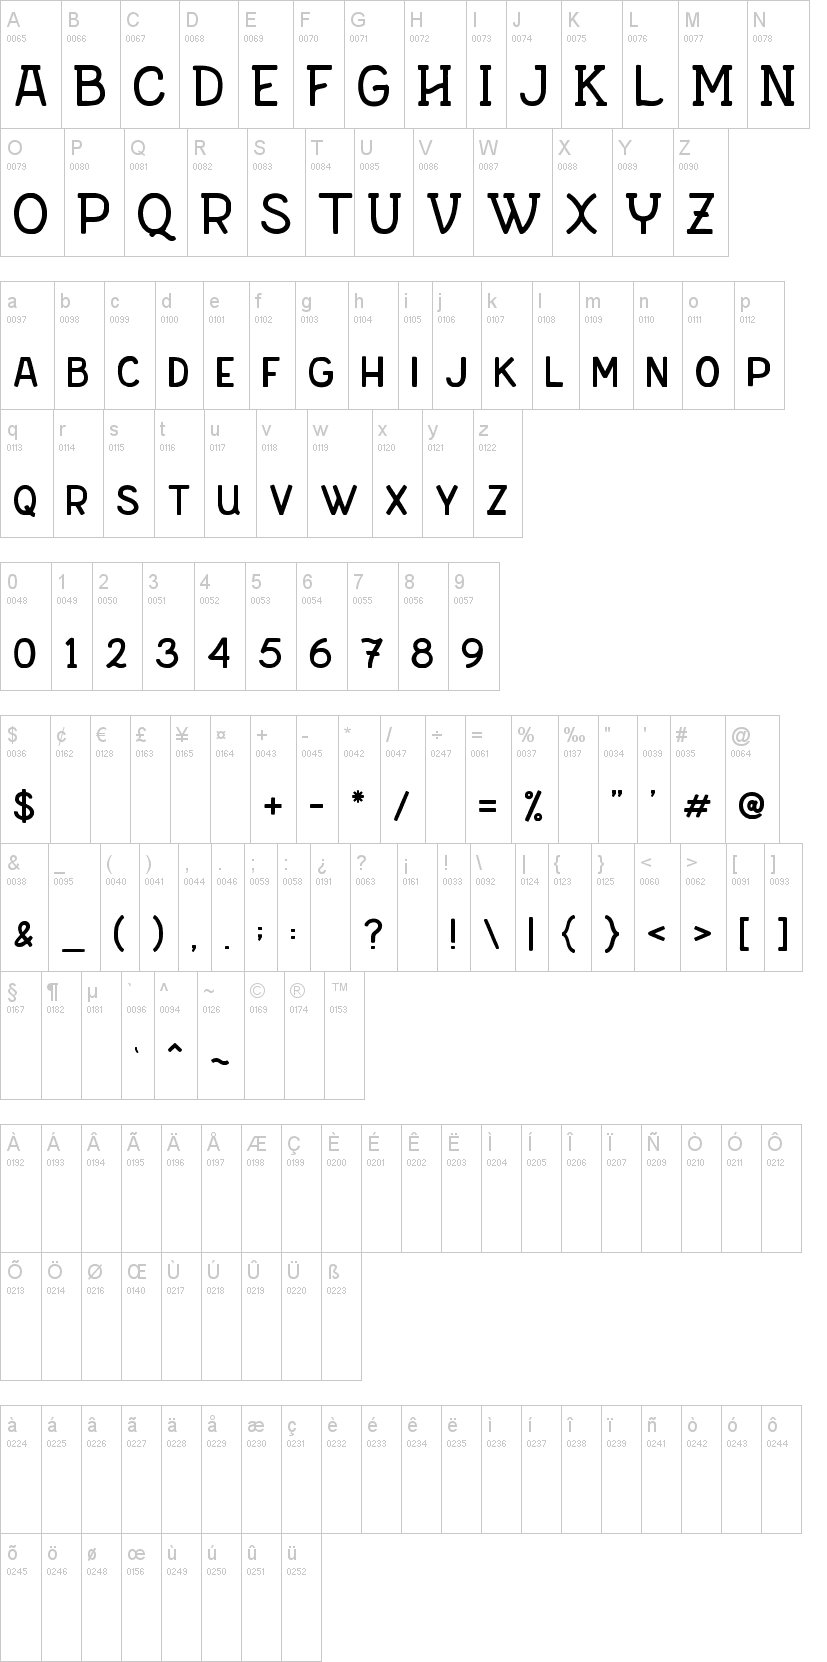 Merfolk Typeface